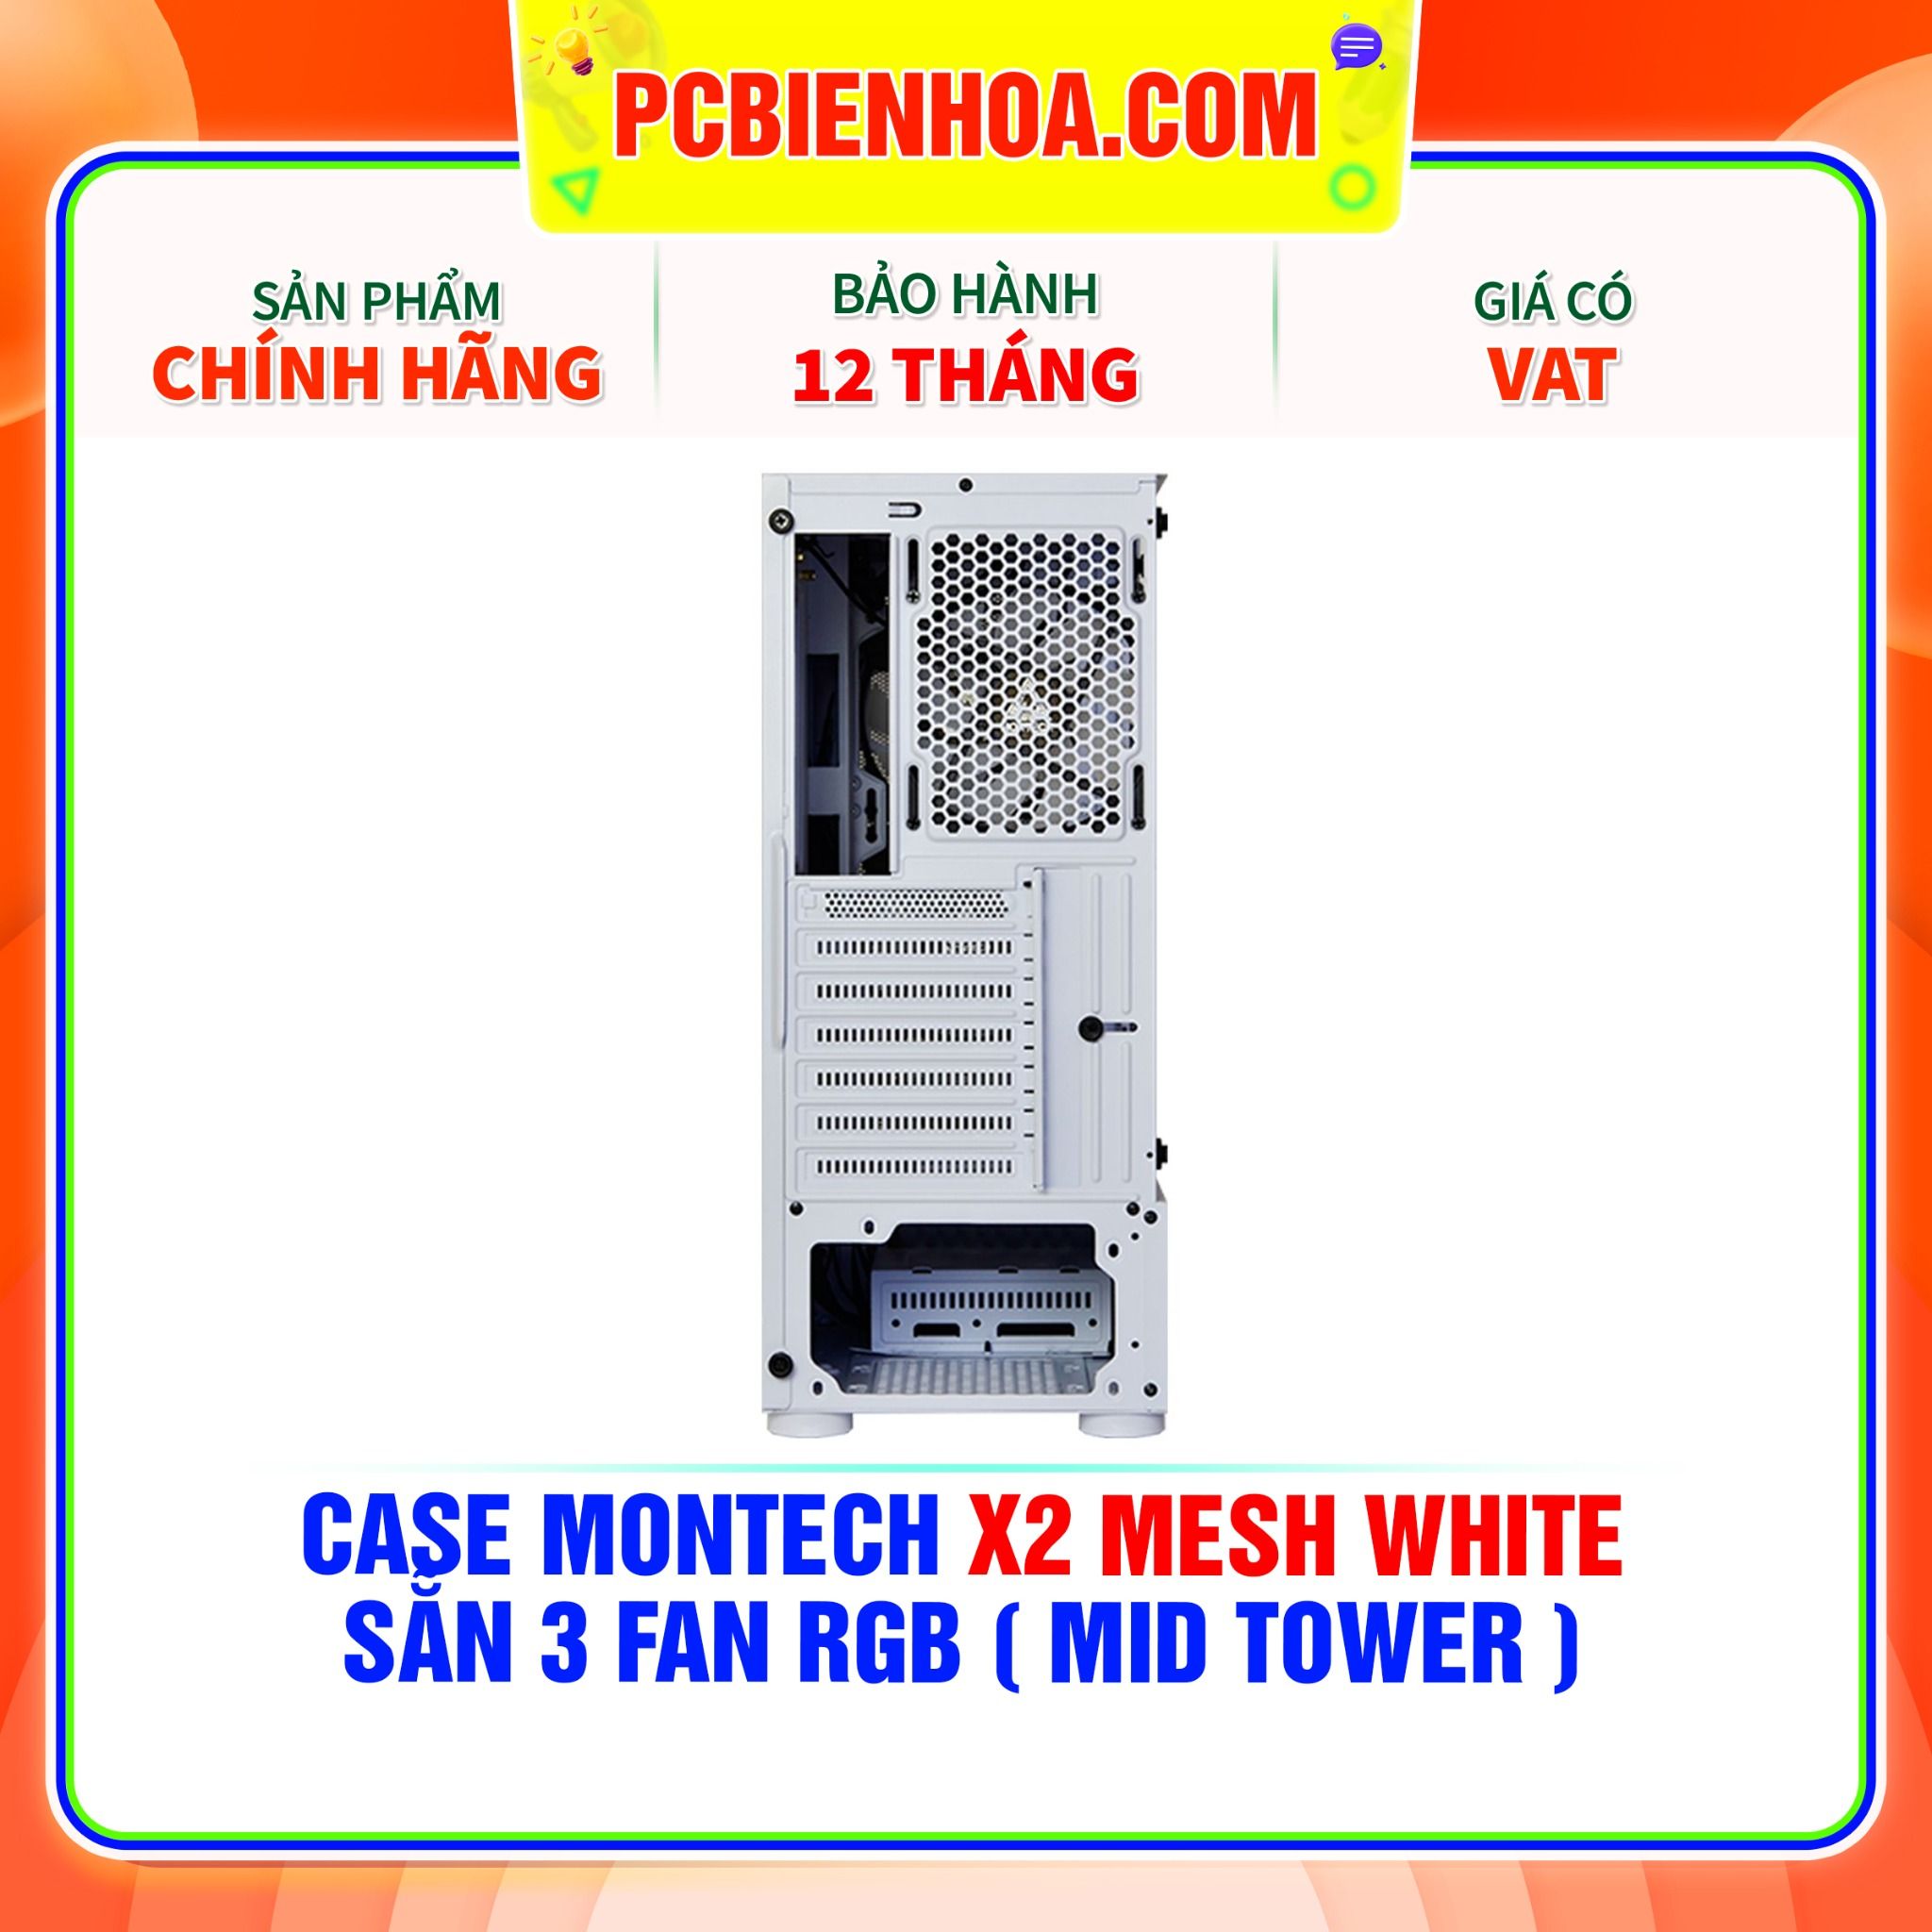  CASE MONTECH X2 MESH WHITE - SẴN 3 FAN LED ( MID TOWER ) 